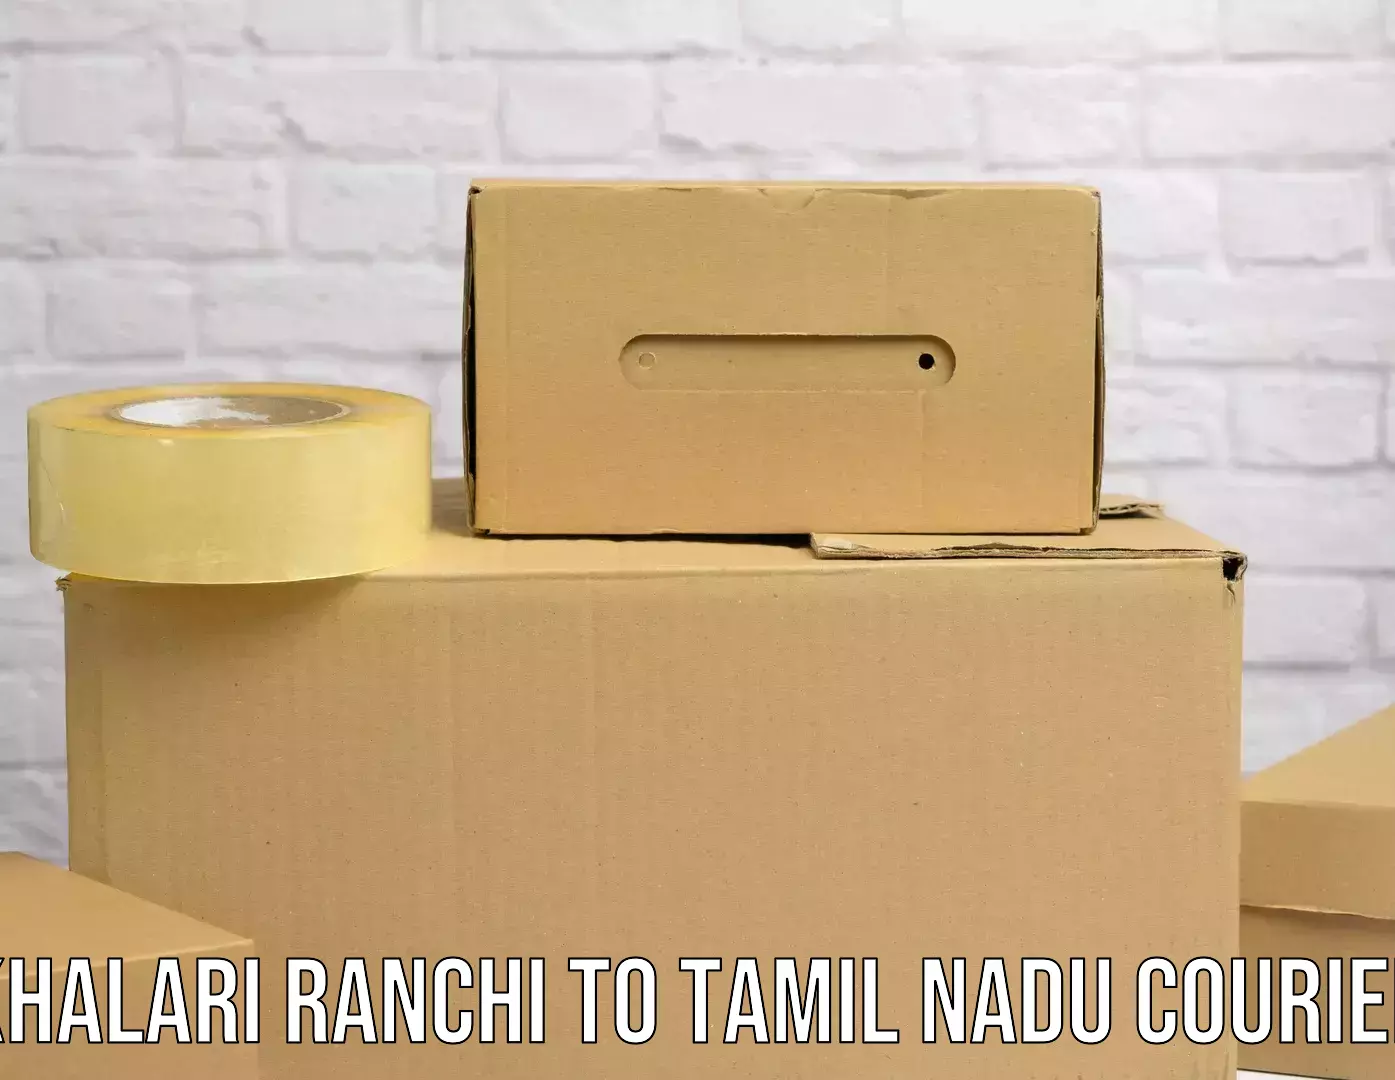 Professional courier handling Khalari Ranchi to Tamil Nadu